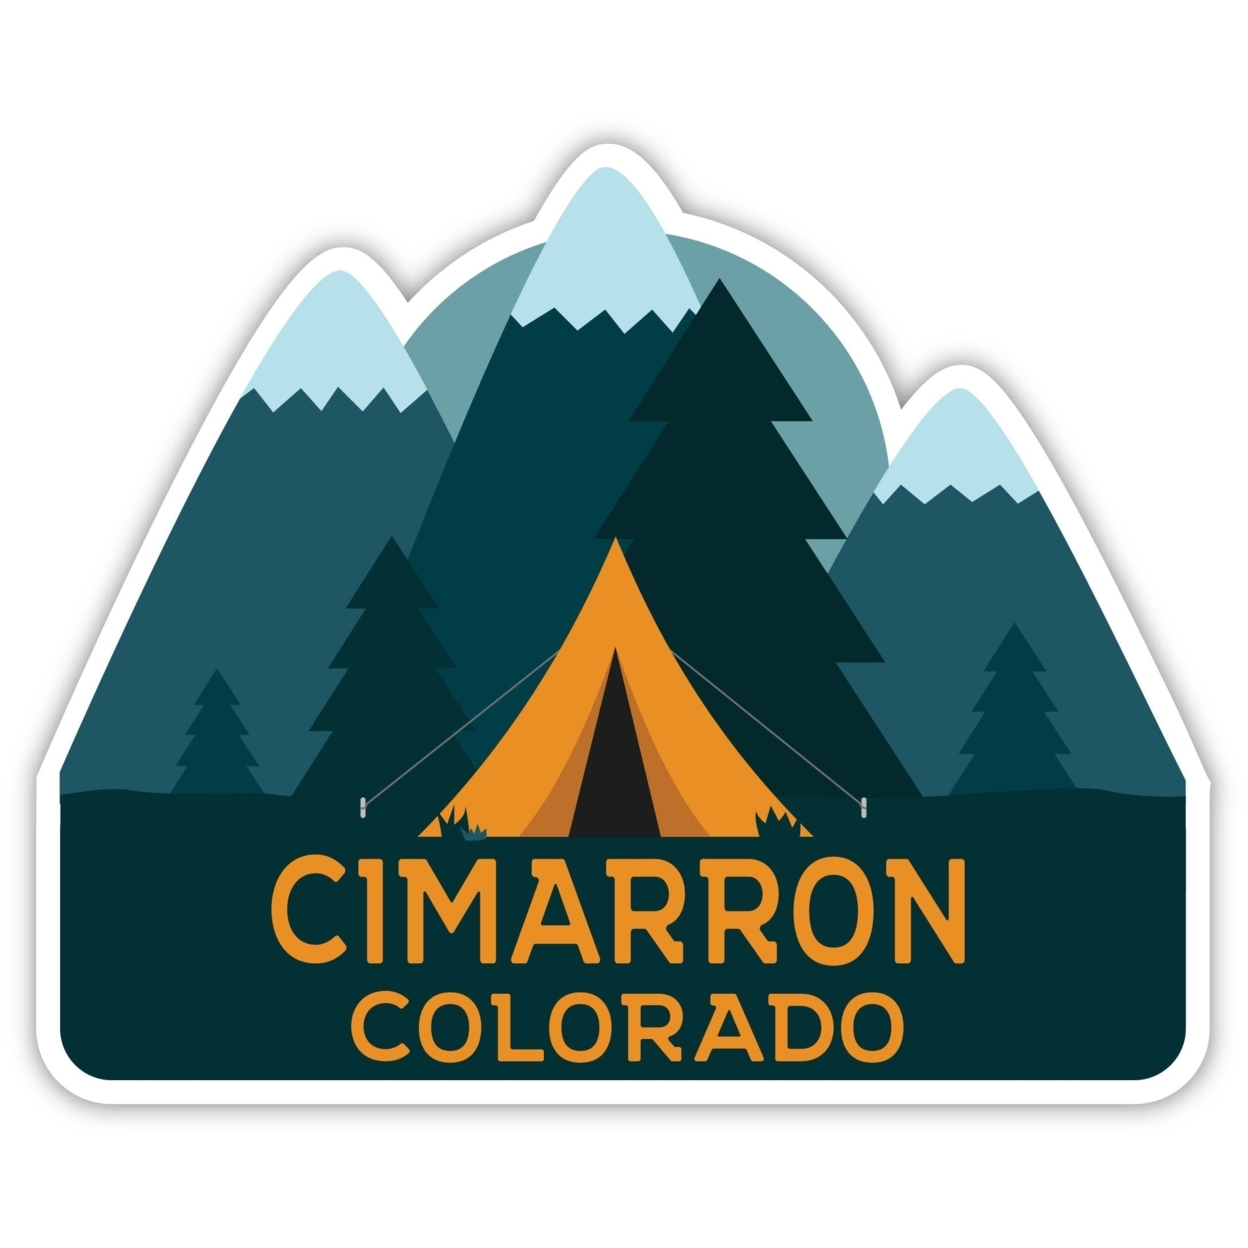 Cimarron Colorado Souvenir Decorative Stickers (Choose Theme And Size) - 4-Pack, 4-Inch, Tent